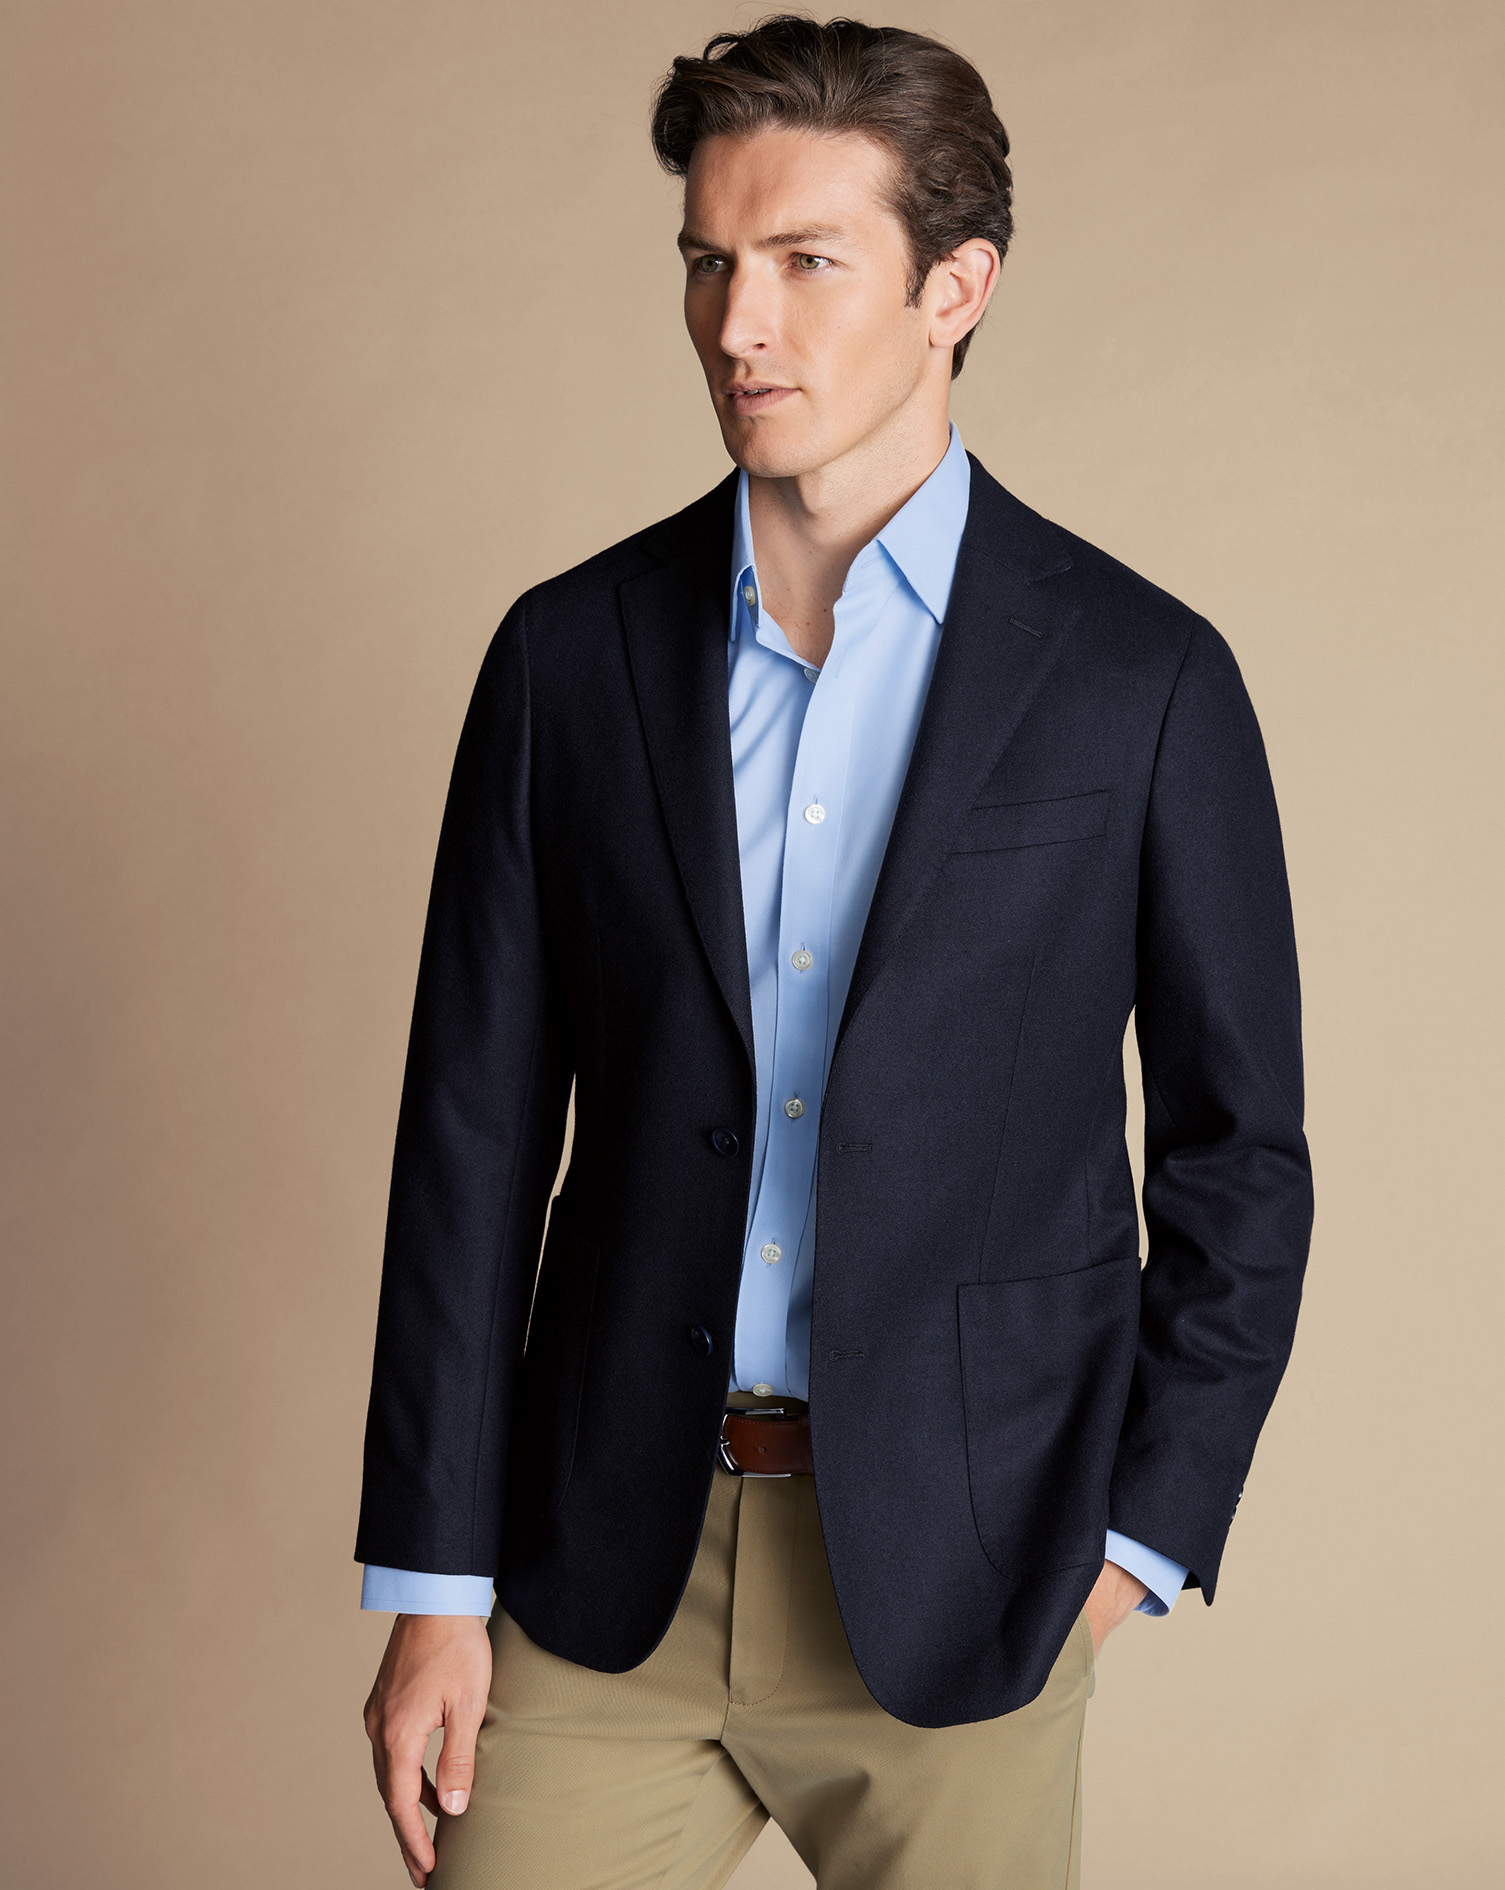 Men's Charles Tyrwhitt Unstructured Twill na Jacket - Navy Blue Size 46R Wool
